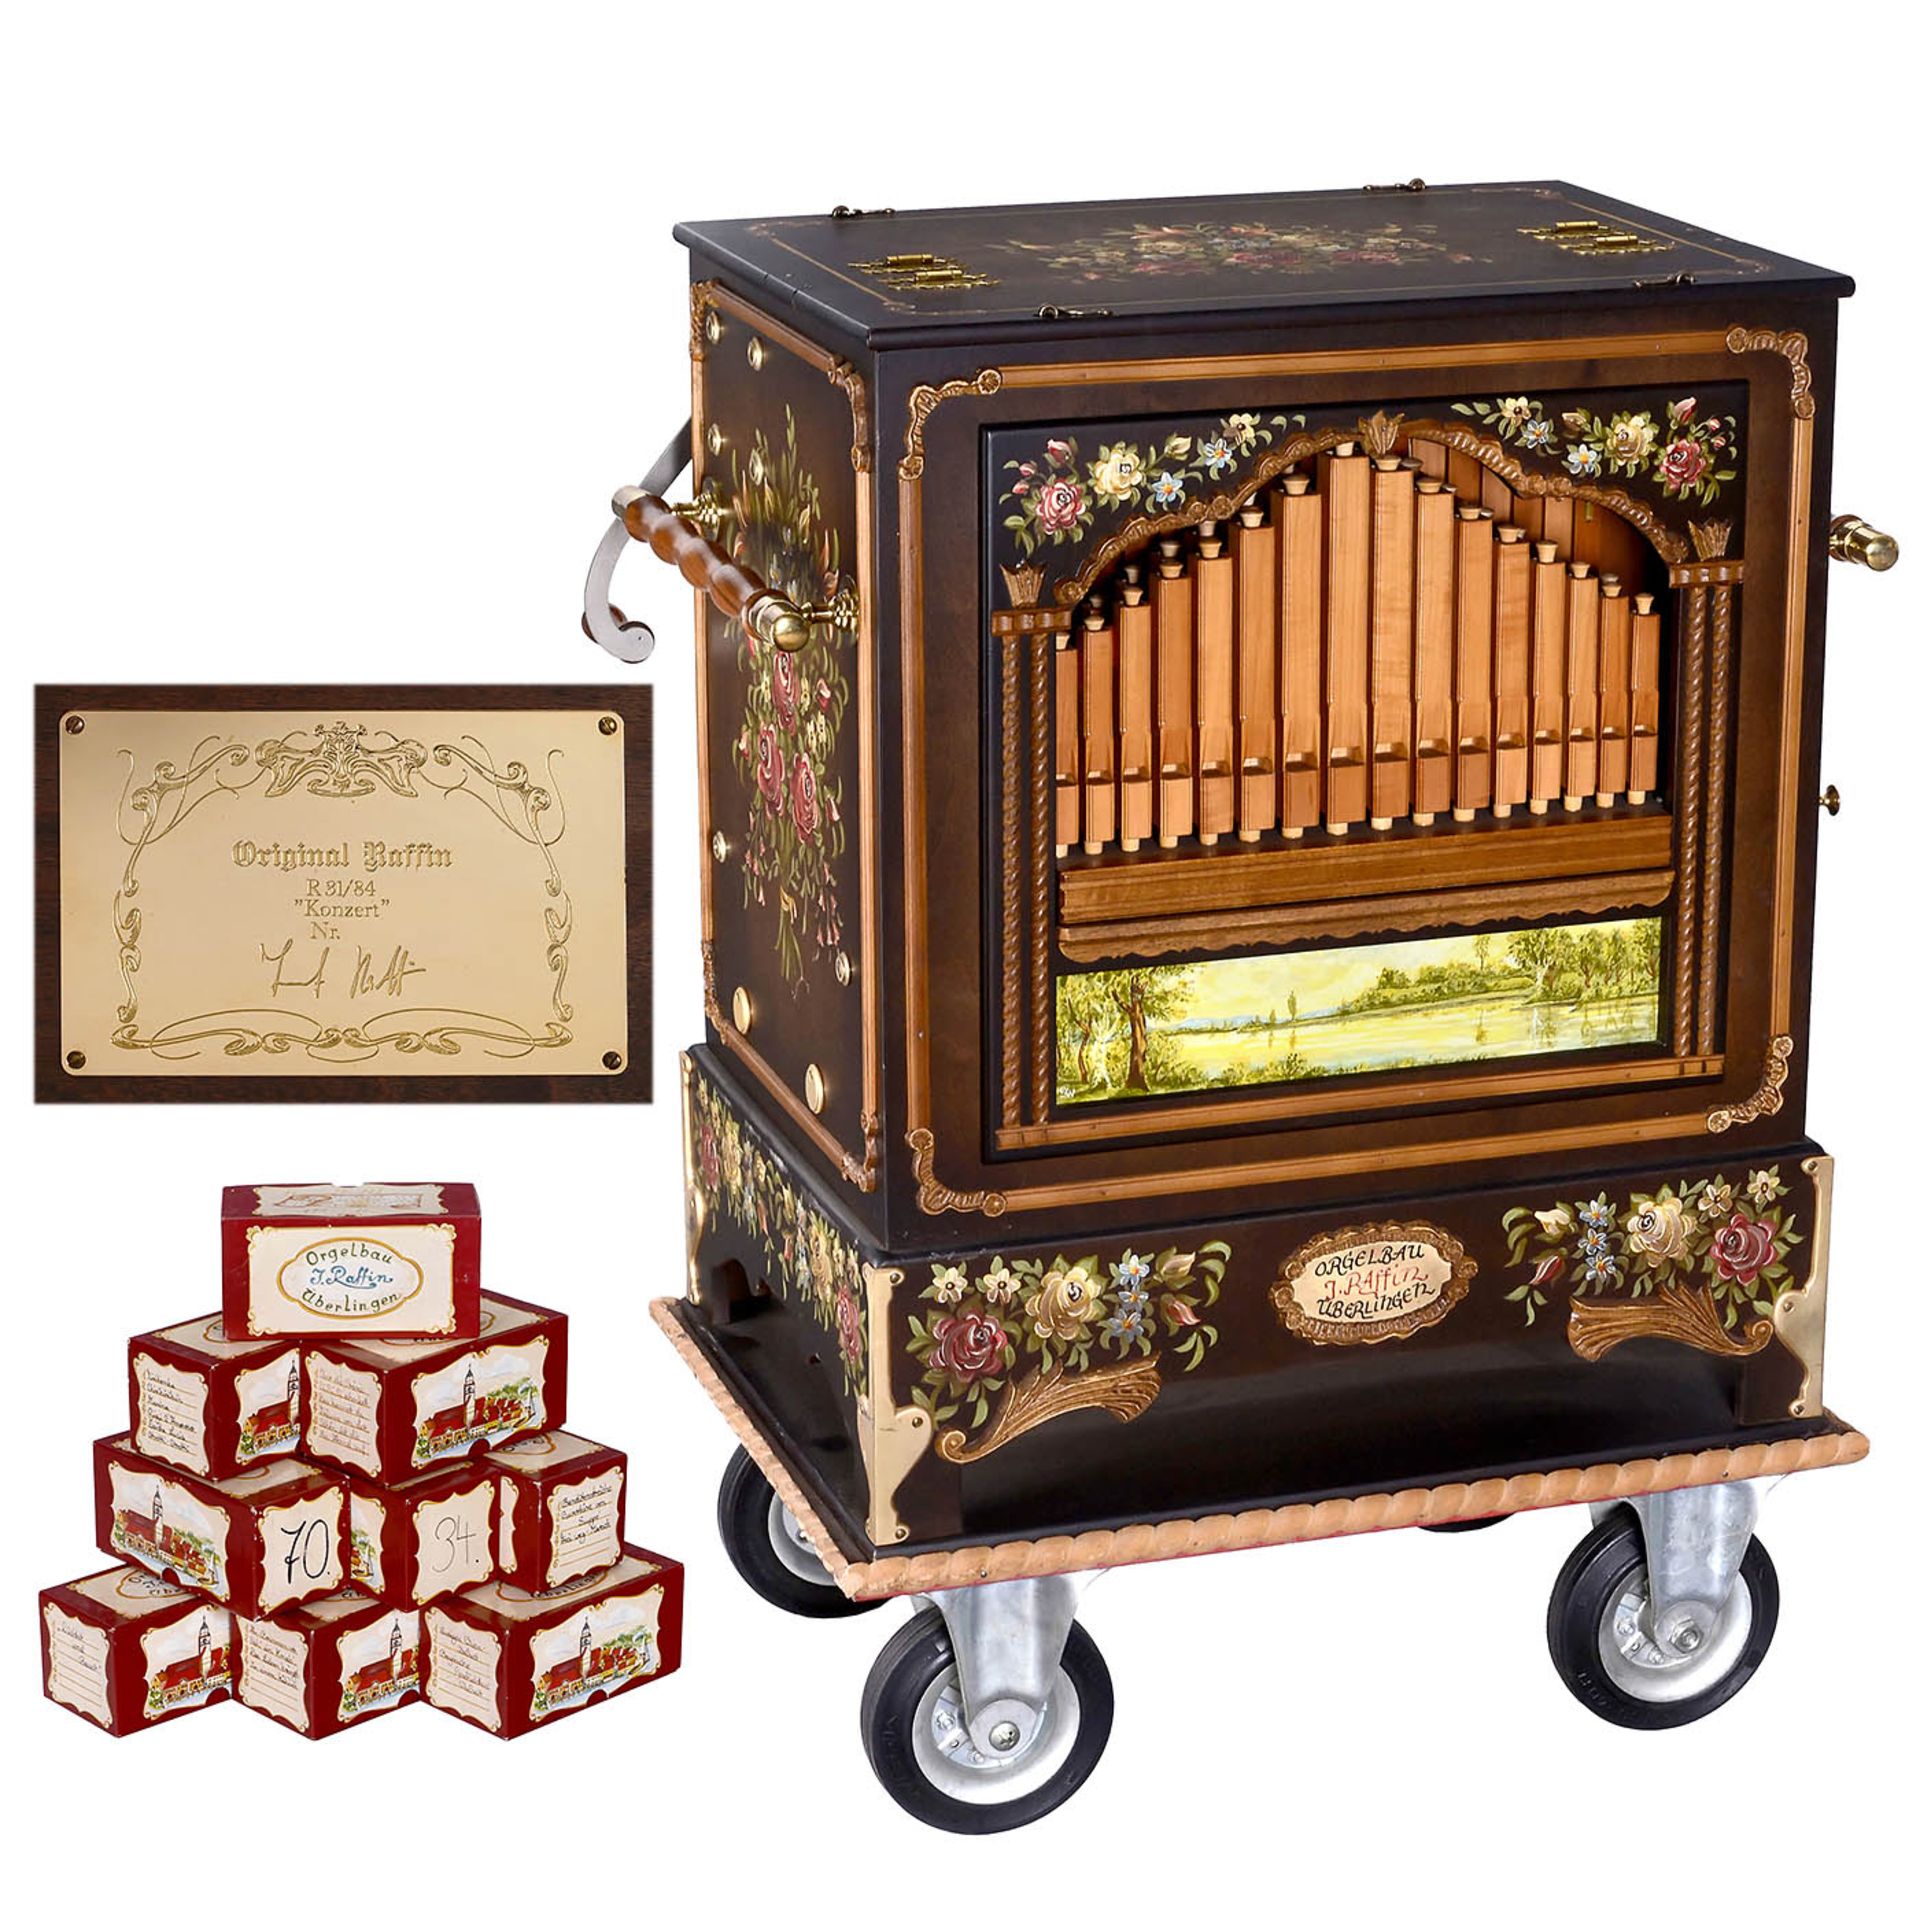 Raffin Model R31/84 "Konzert" Street Organ